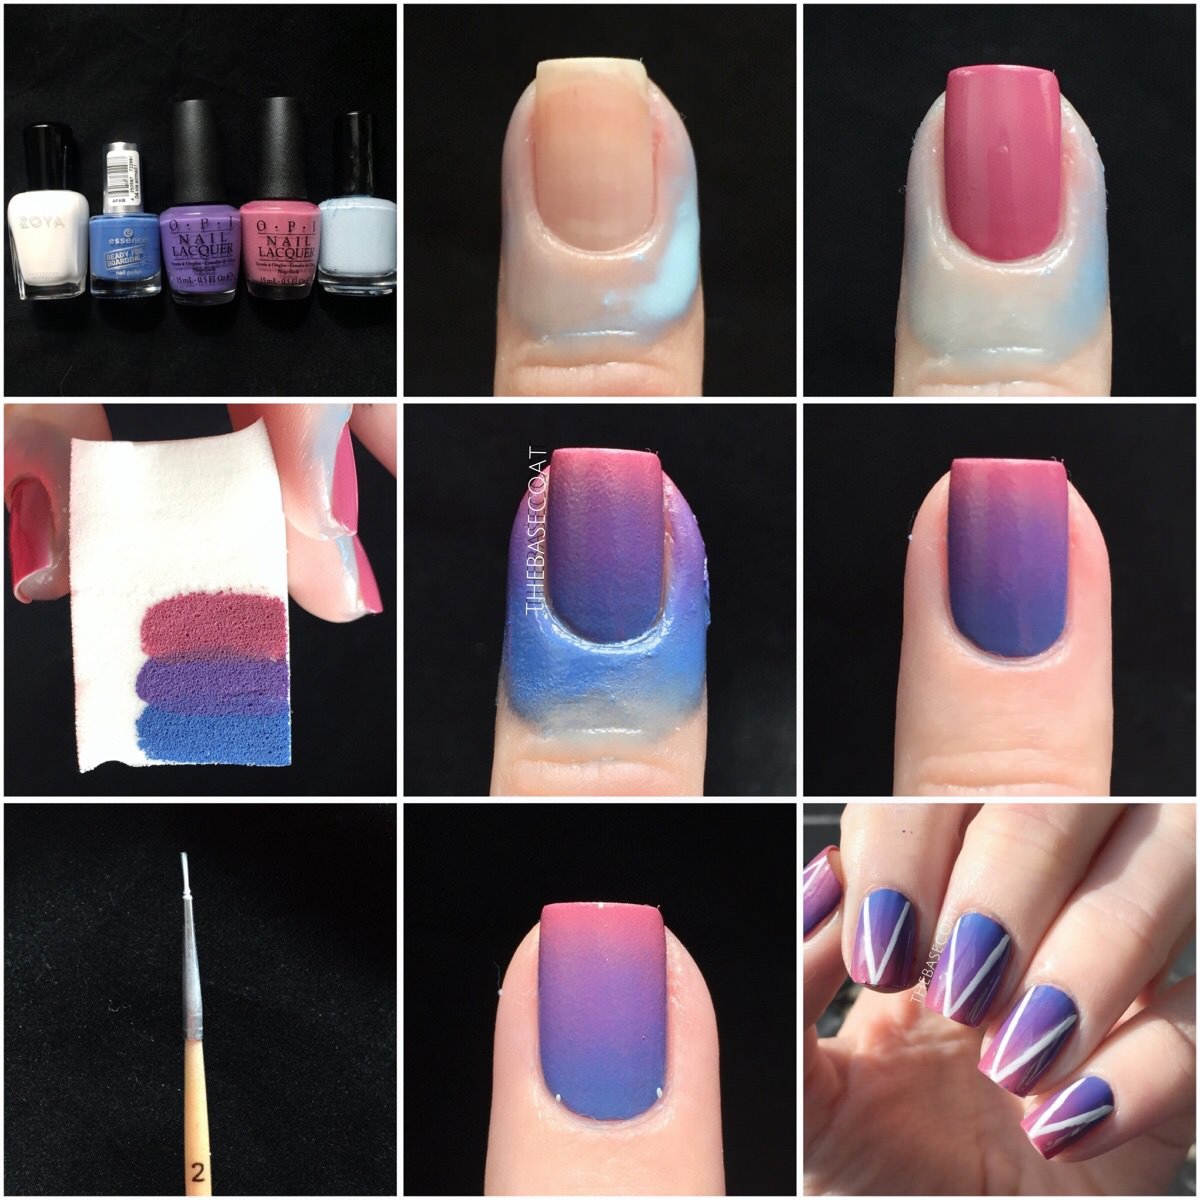 Как красиво накрасить ногти в домашних условиях: уроки с фото и видео